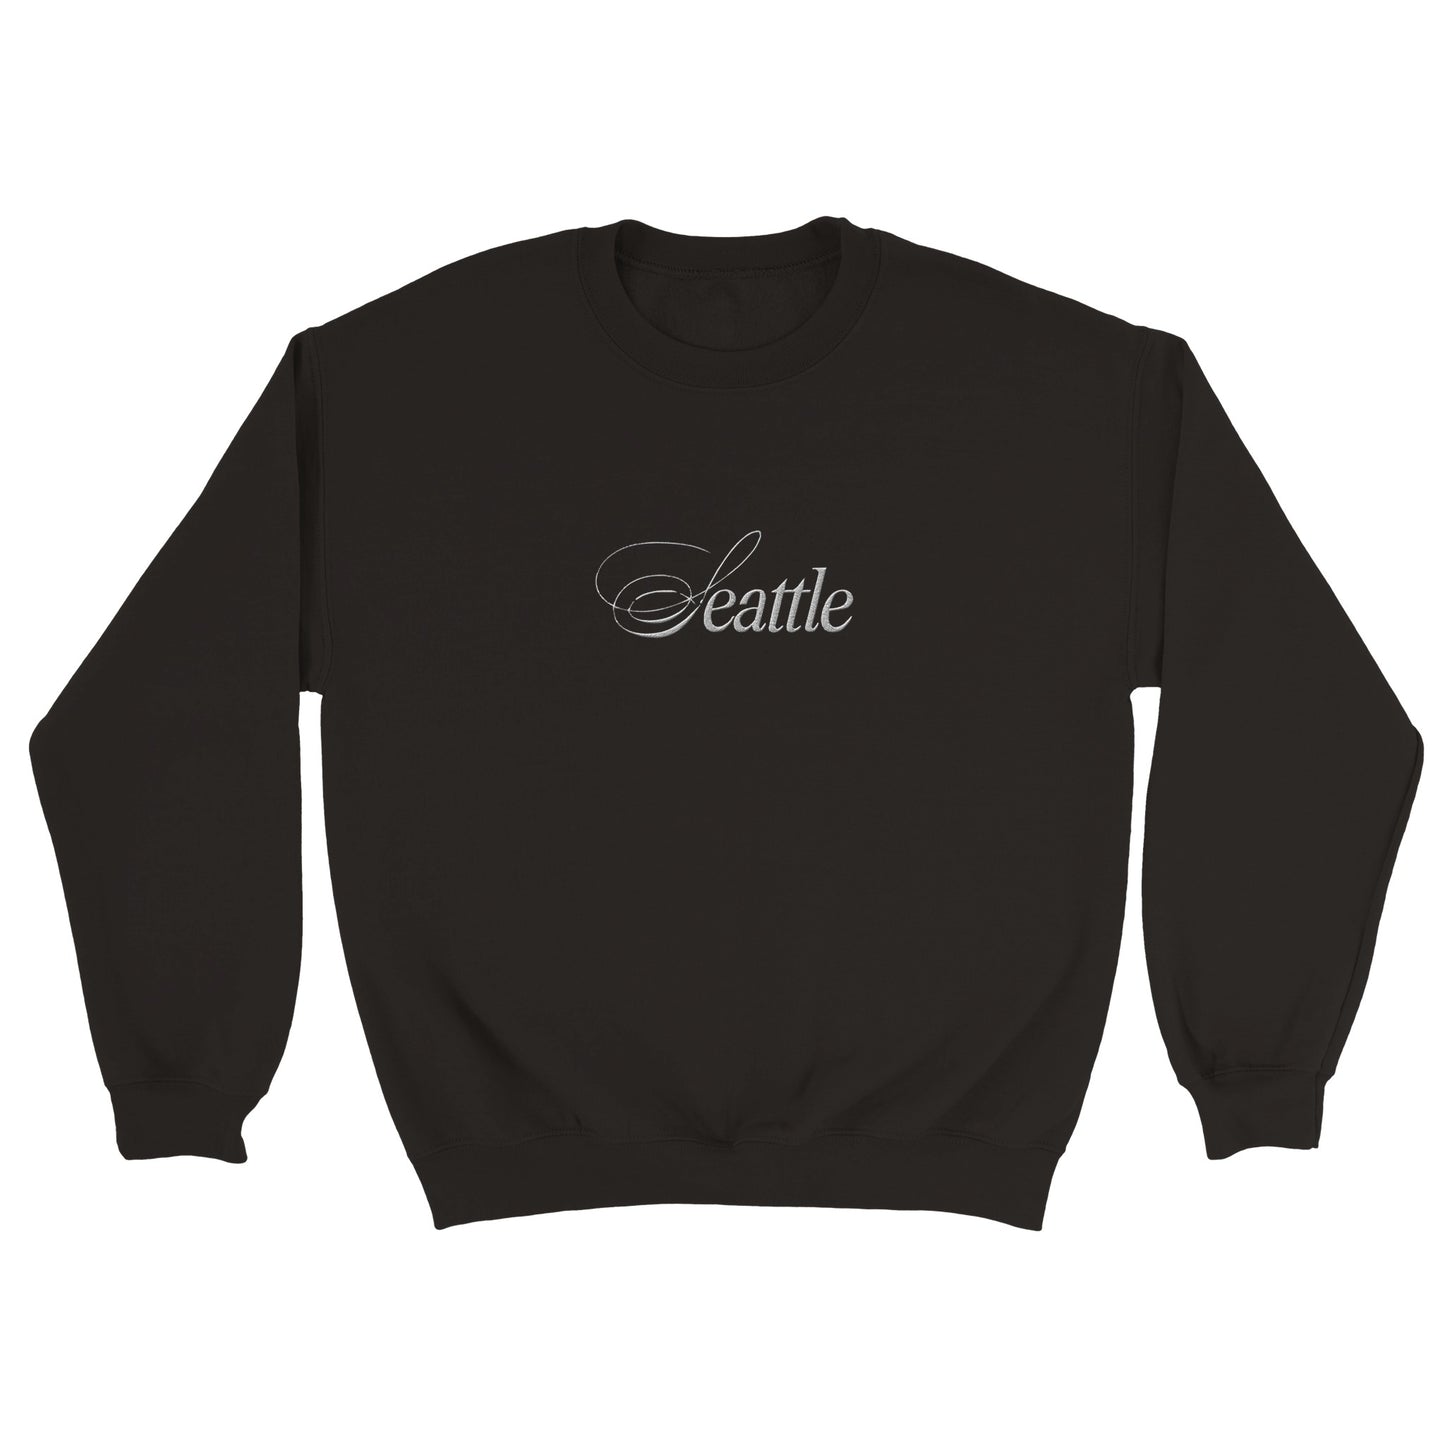 Seattle City Embroidered Unisex Sweatshirt